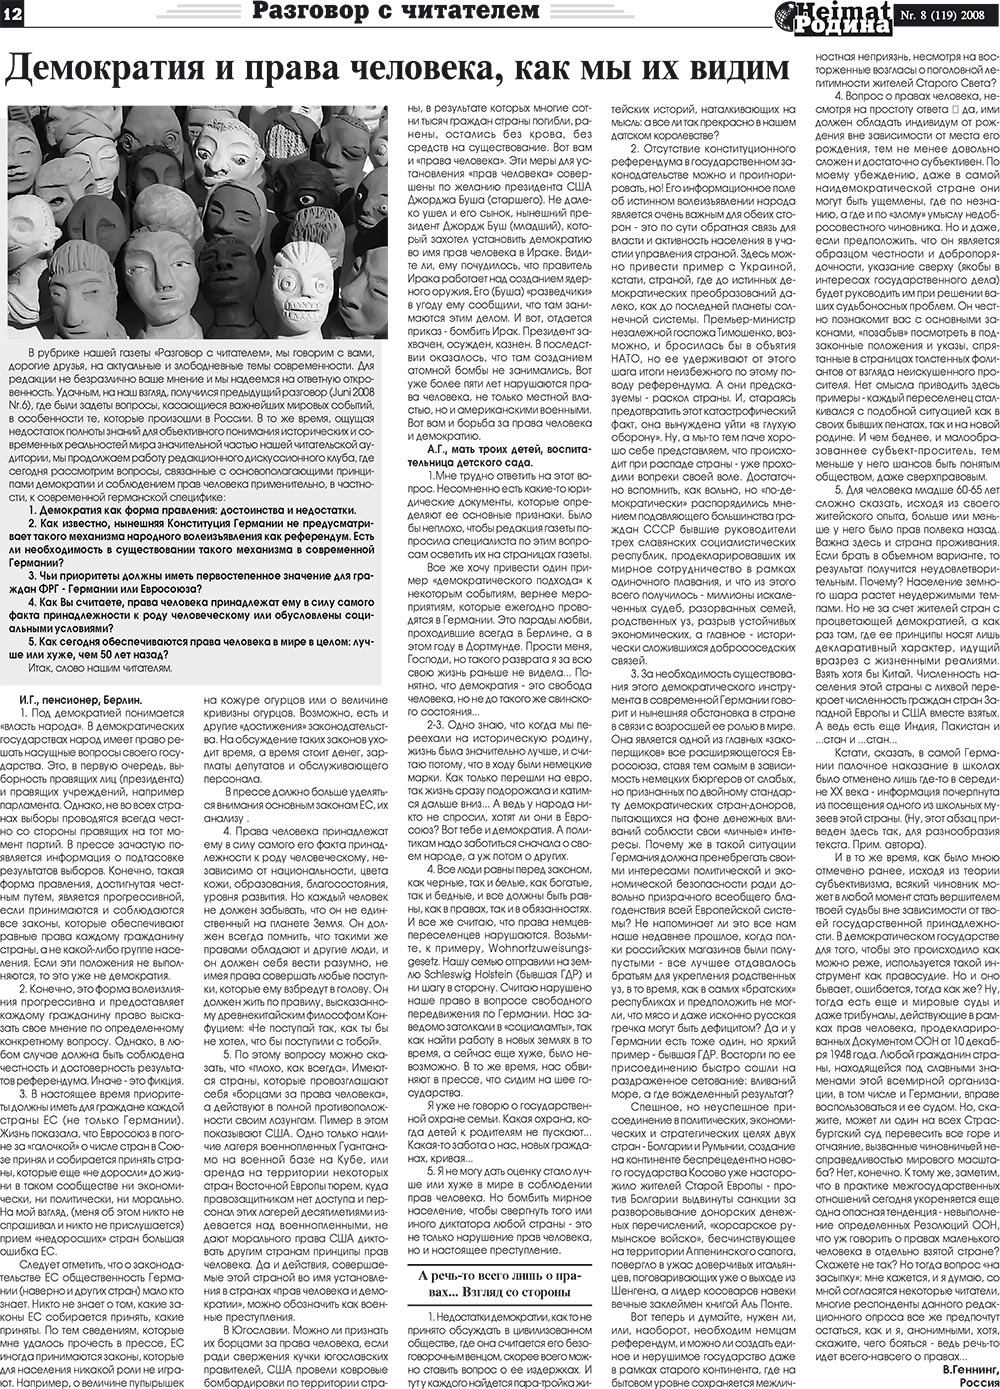 Heimat-Родина, газета. 2008 №8 стр.12